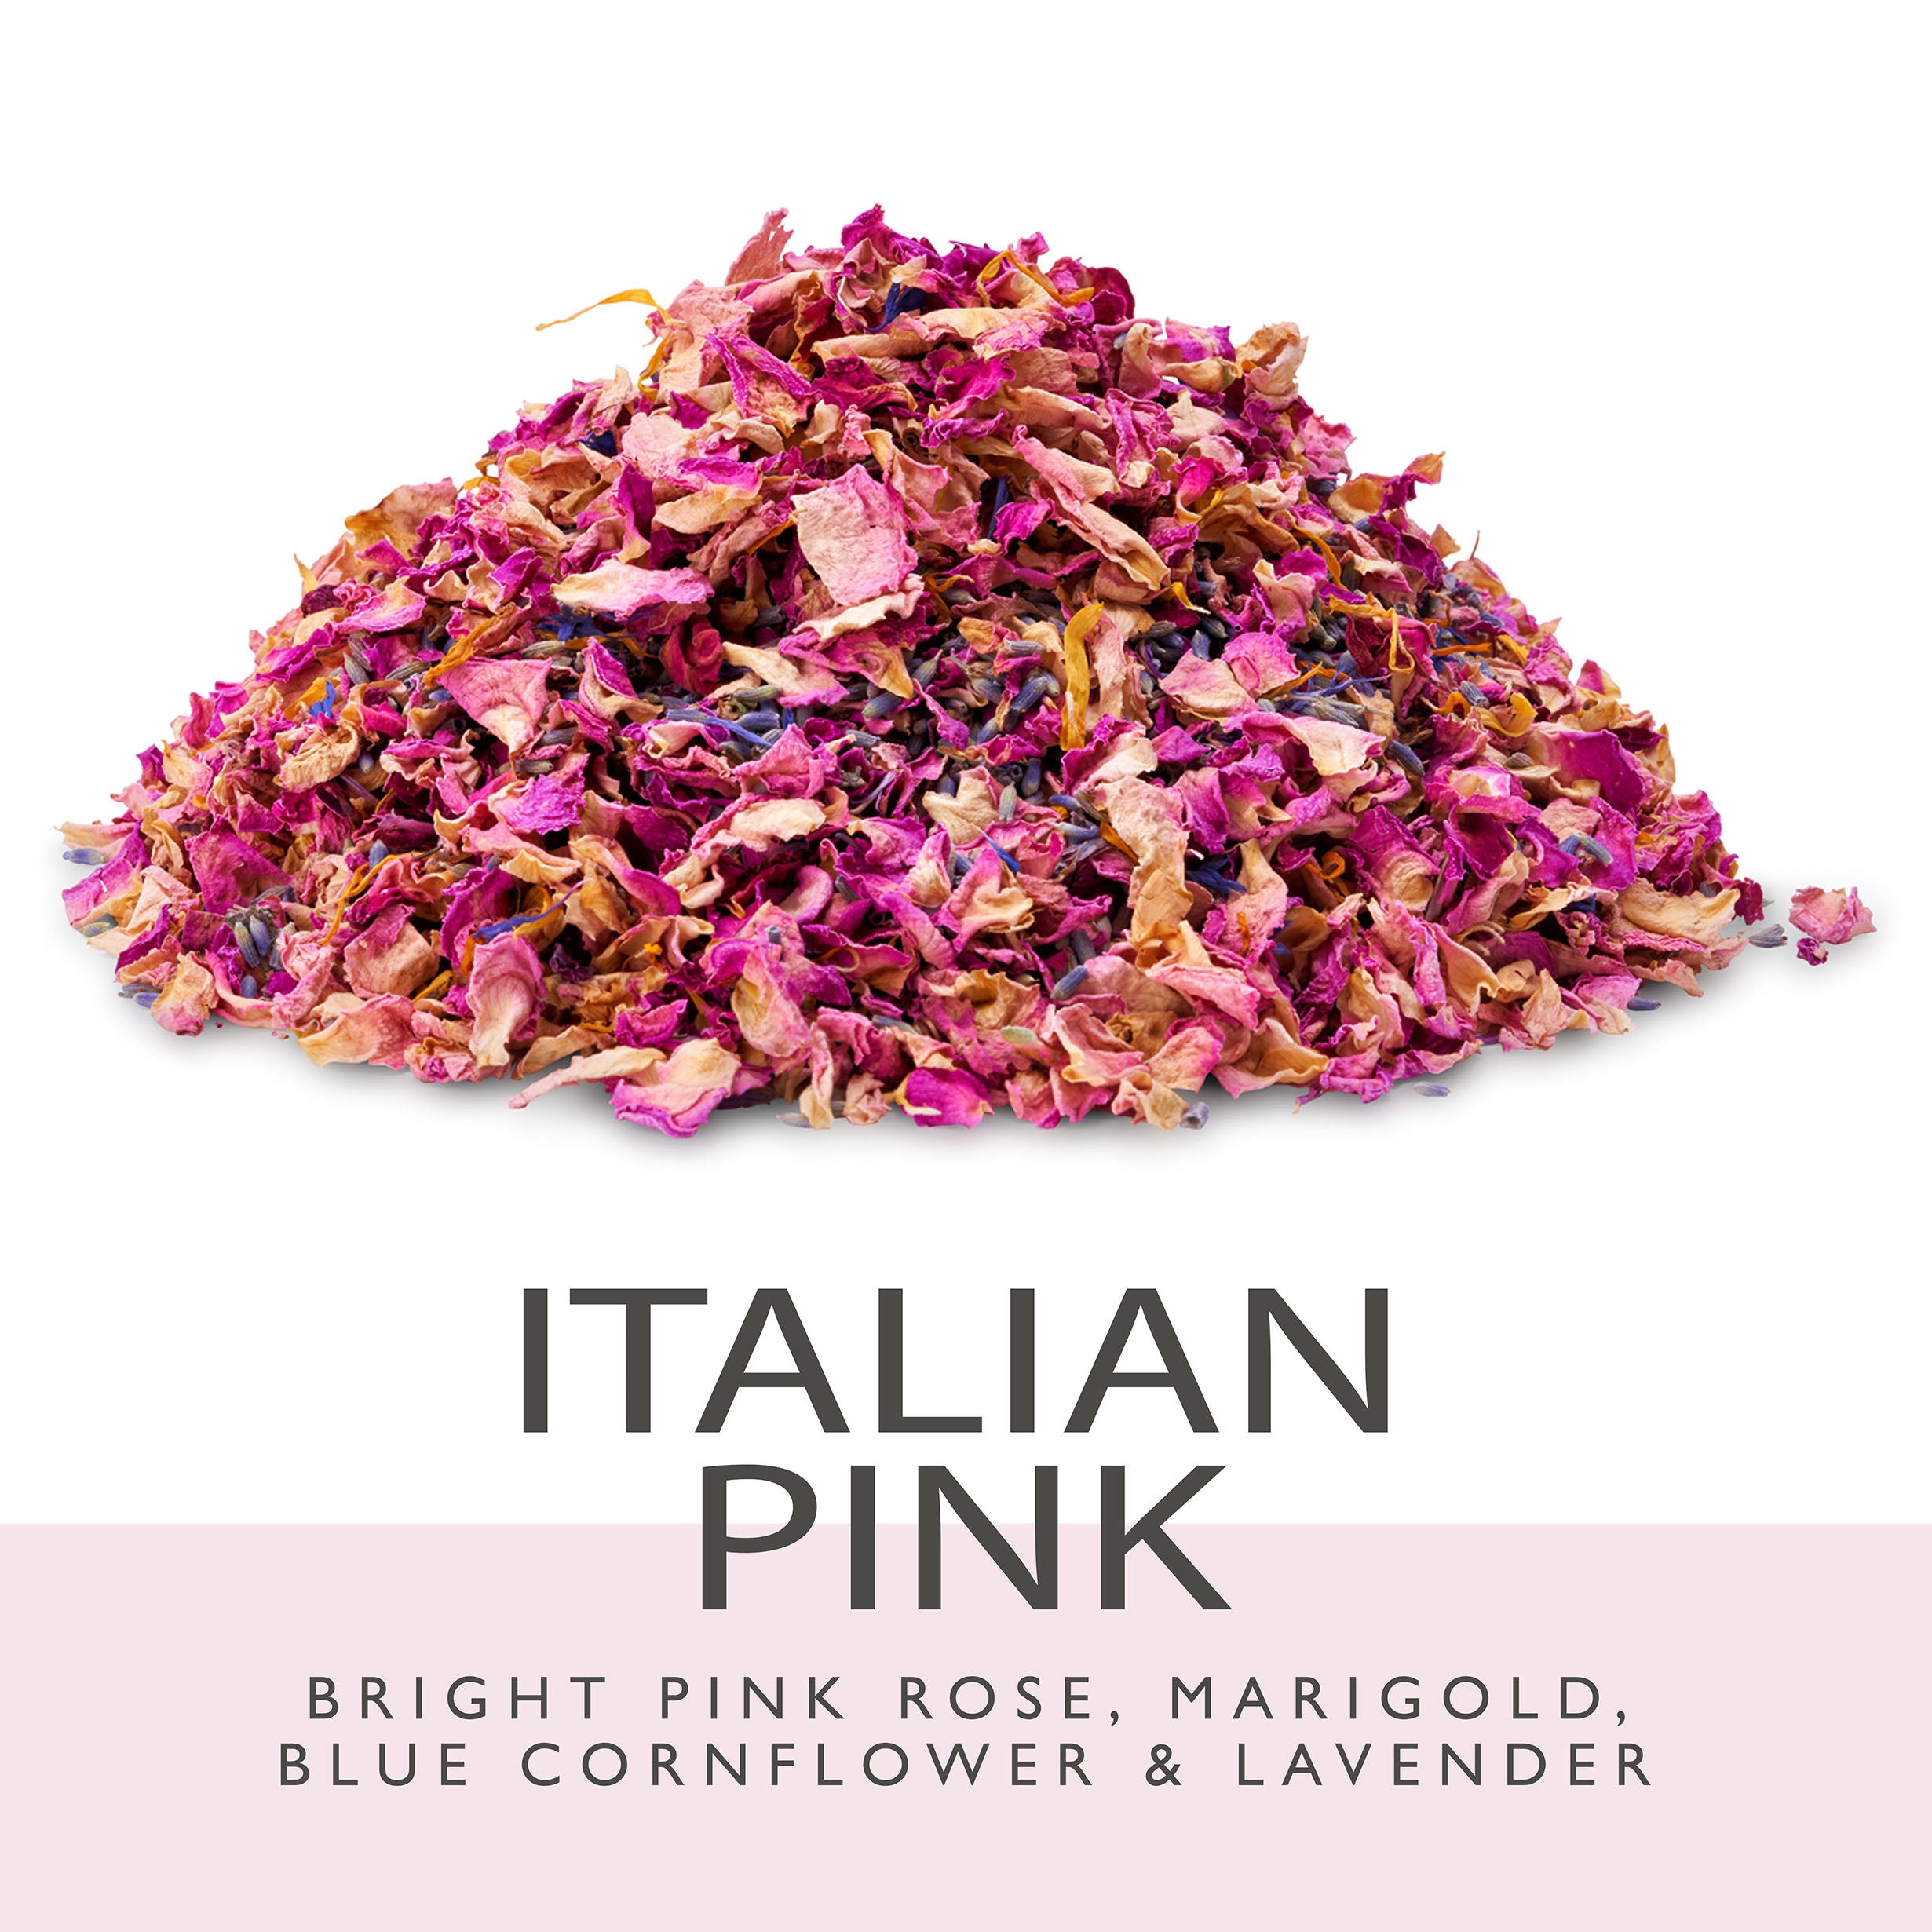 Bright Pink Small Natural Rose Petal Sample - Real Flower Petal Confetti Co